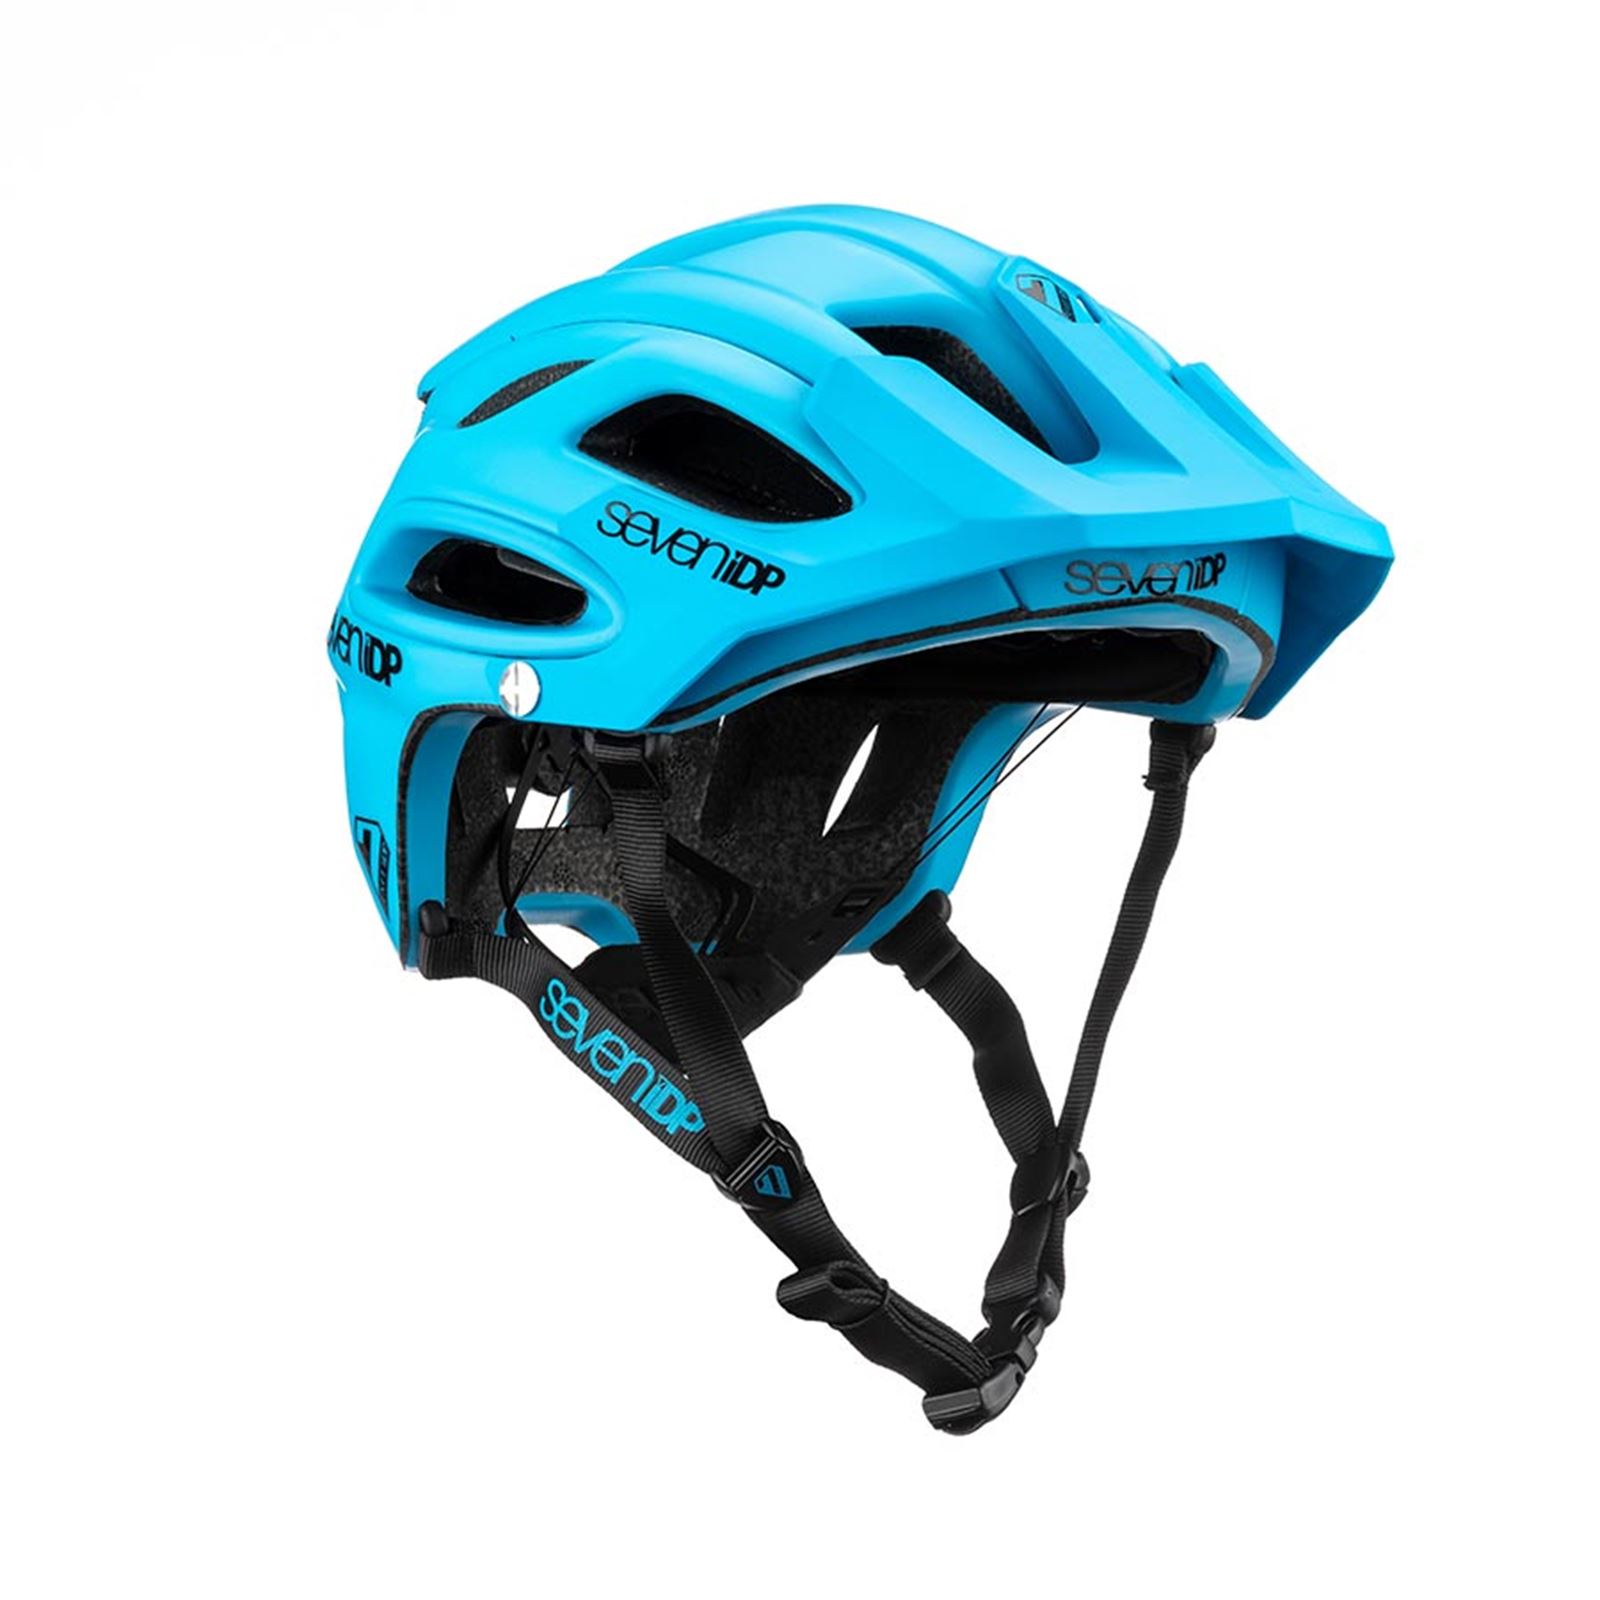 7iDP M2 Helmet - Medium/Large - 56-59cm - Matte Blue